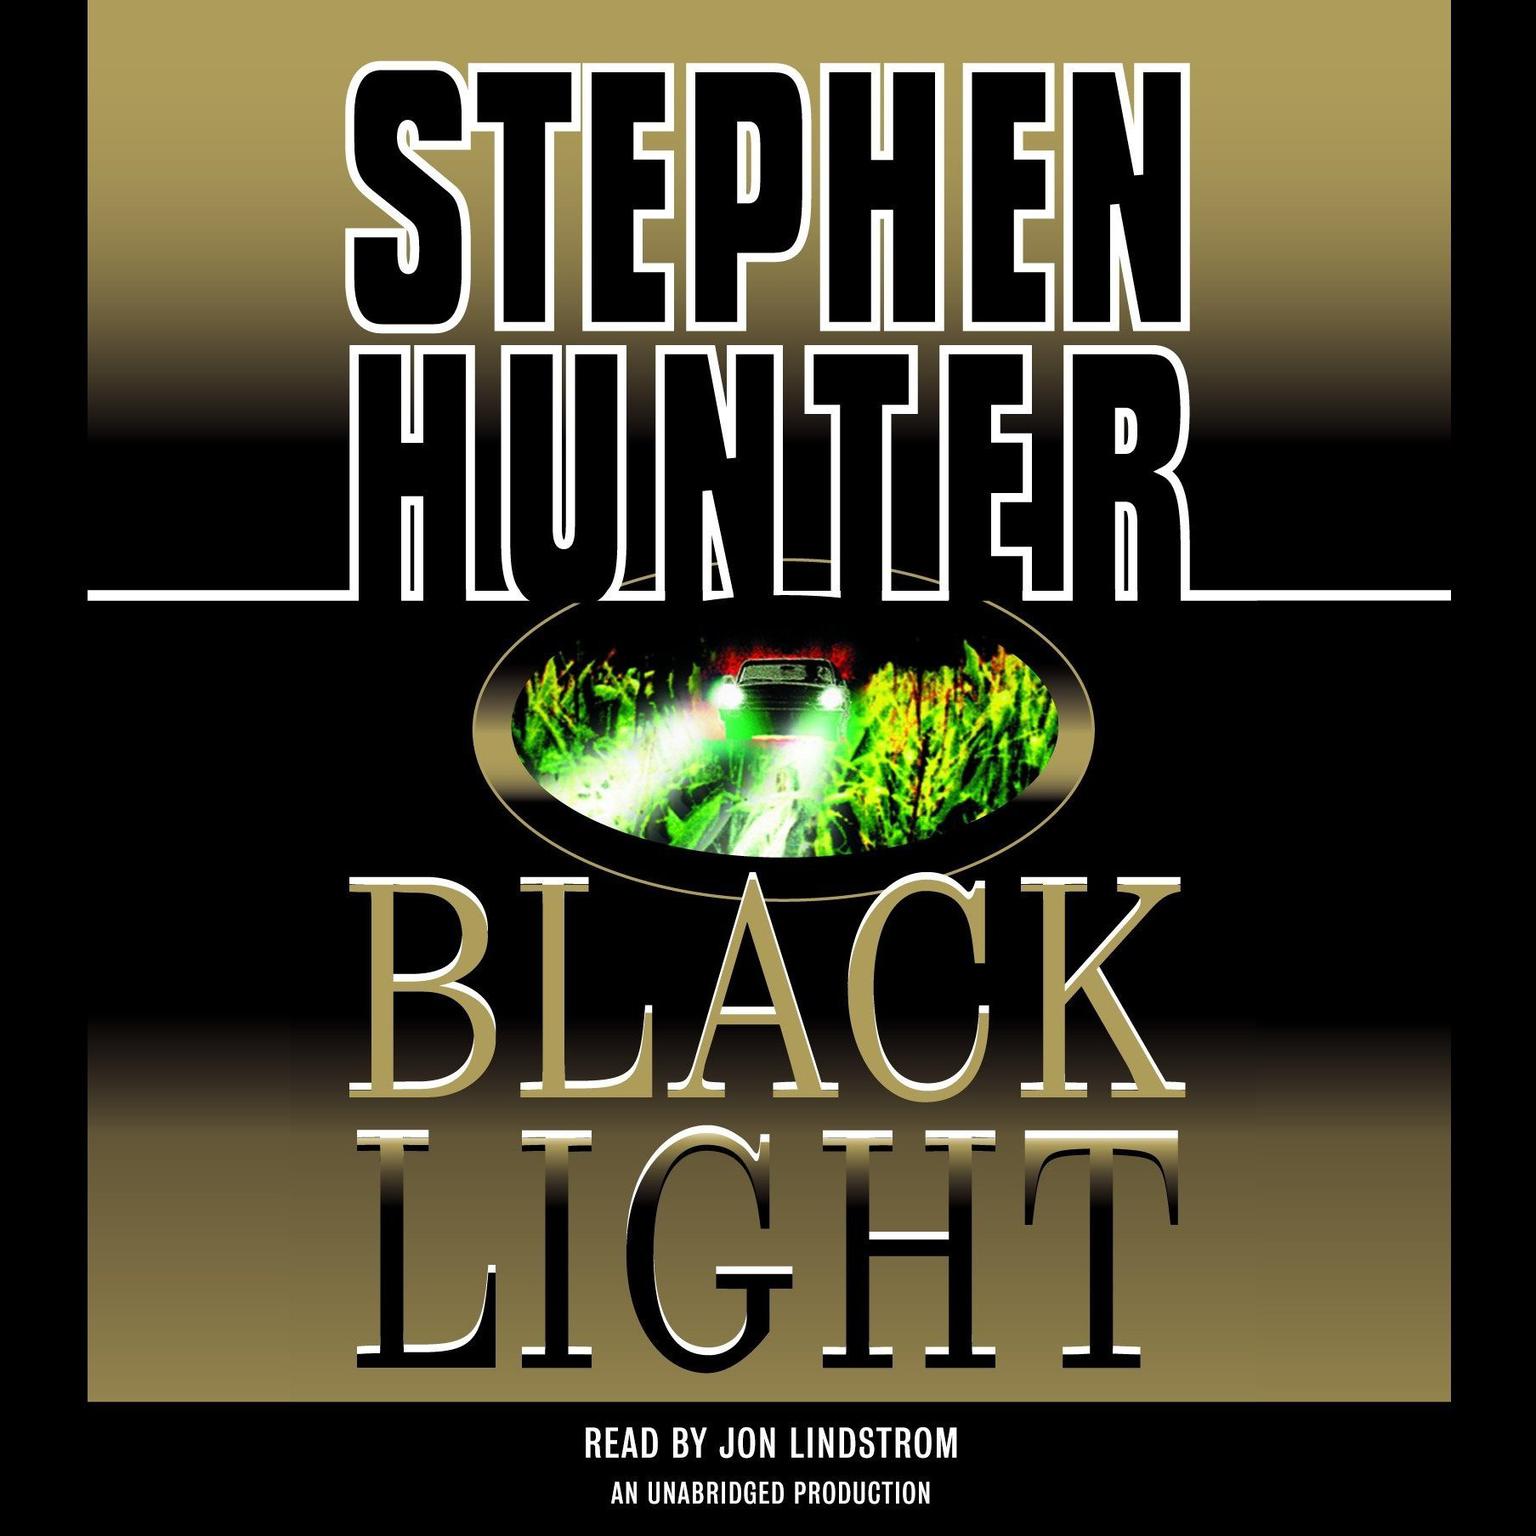 Black Light Audiobook, by Stephen Hunter